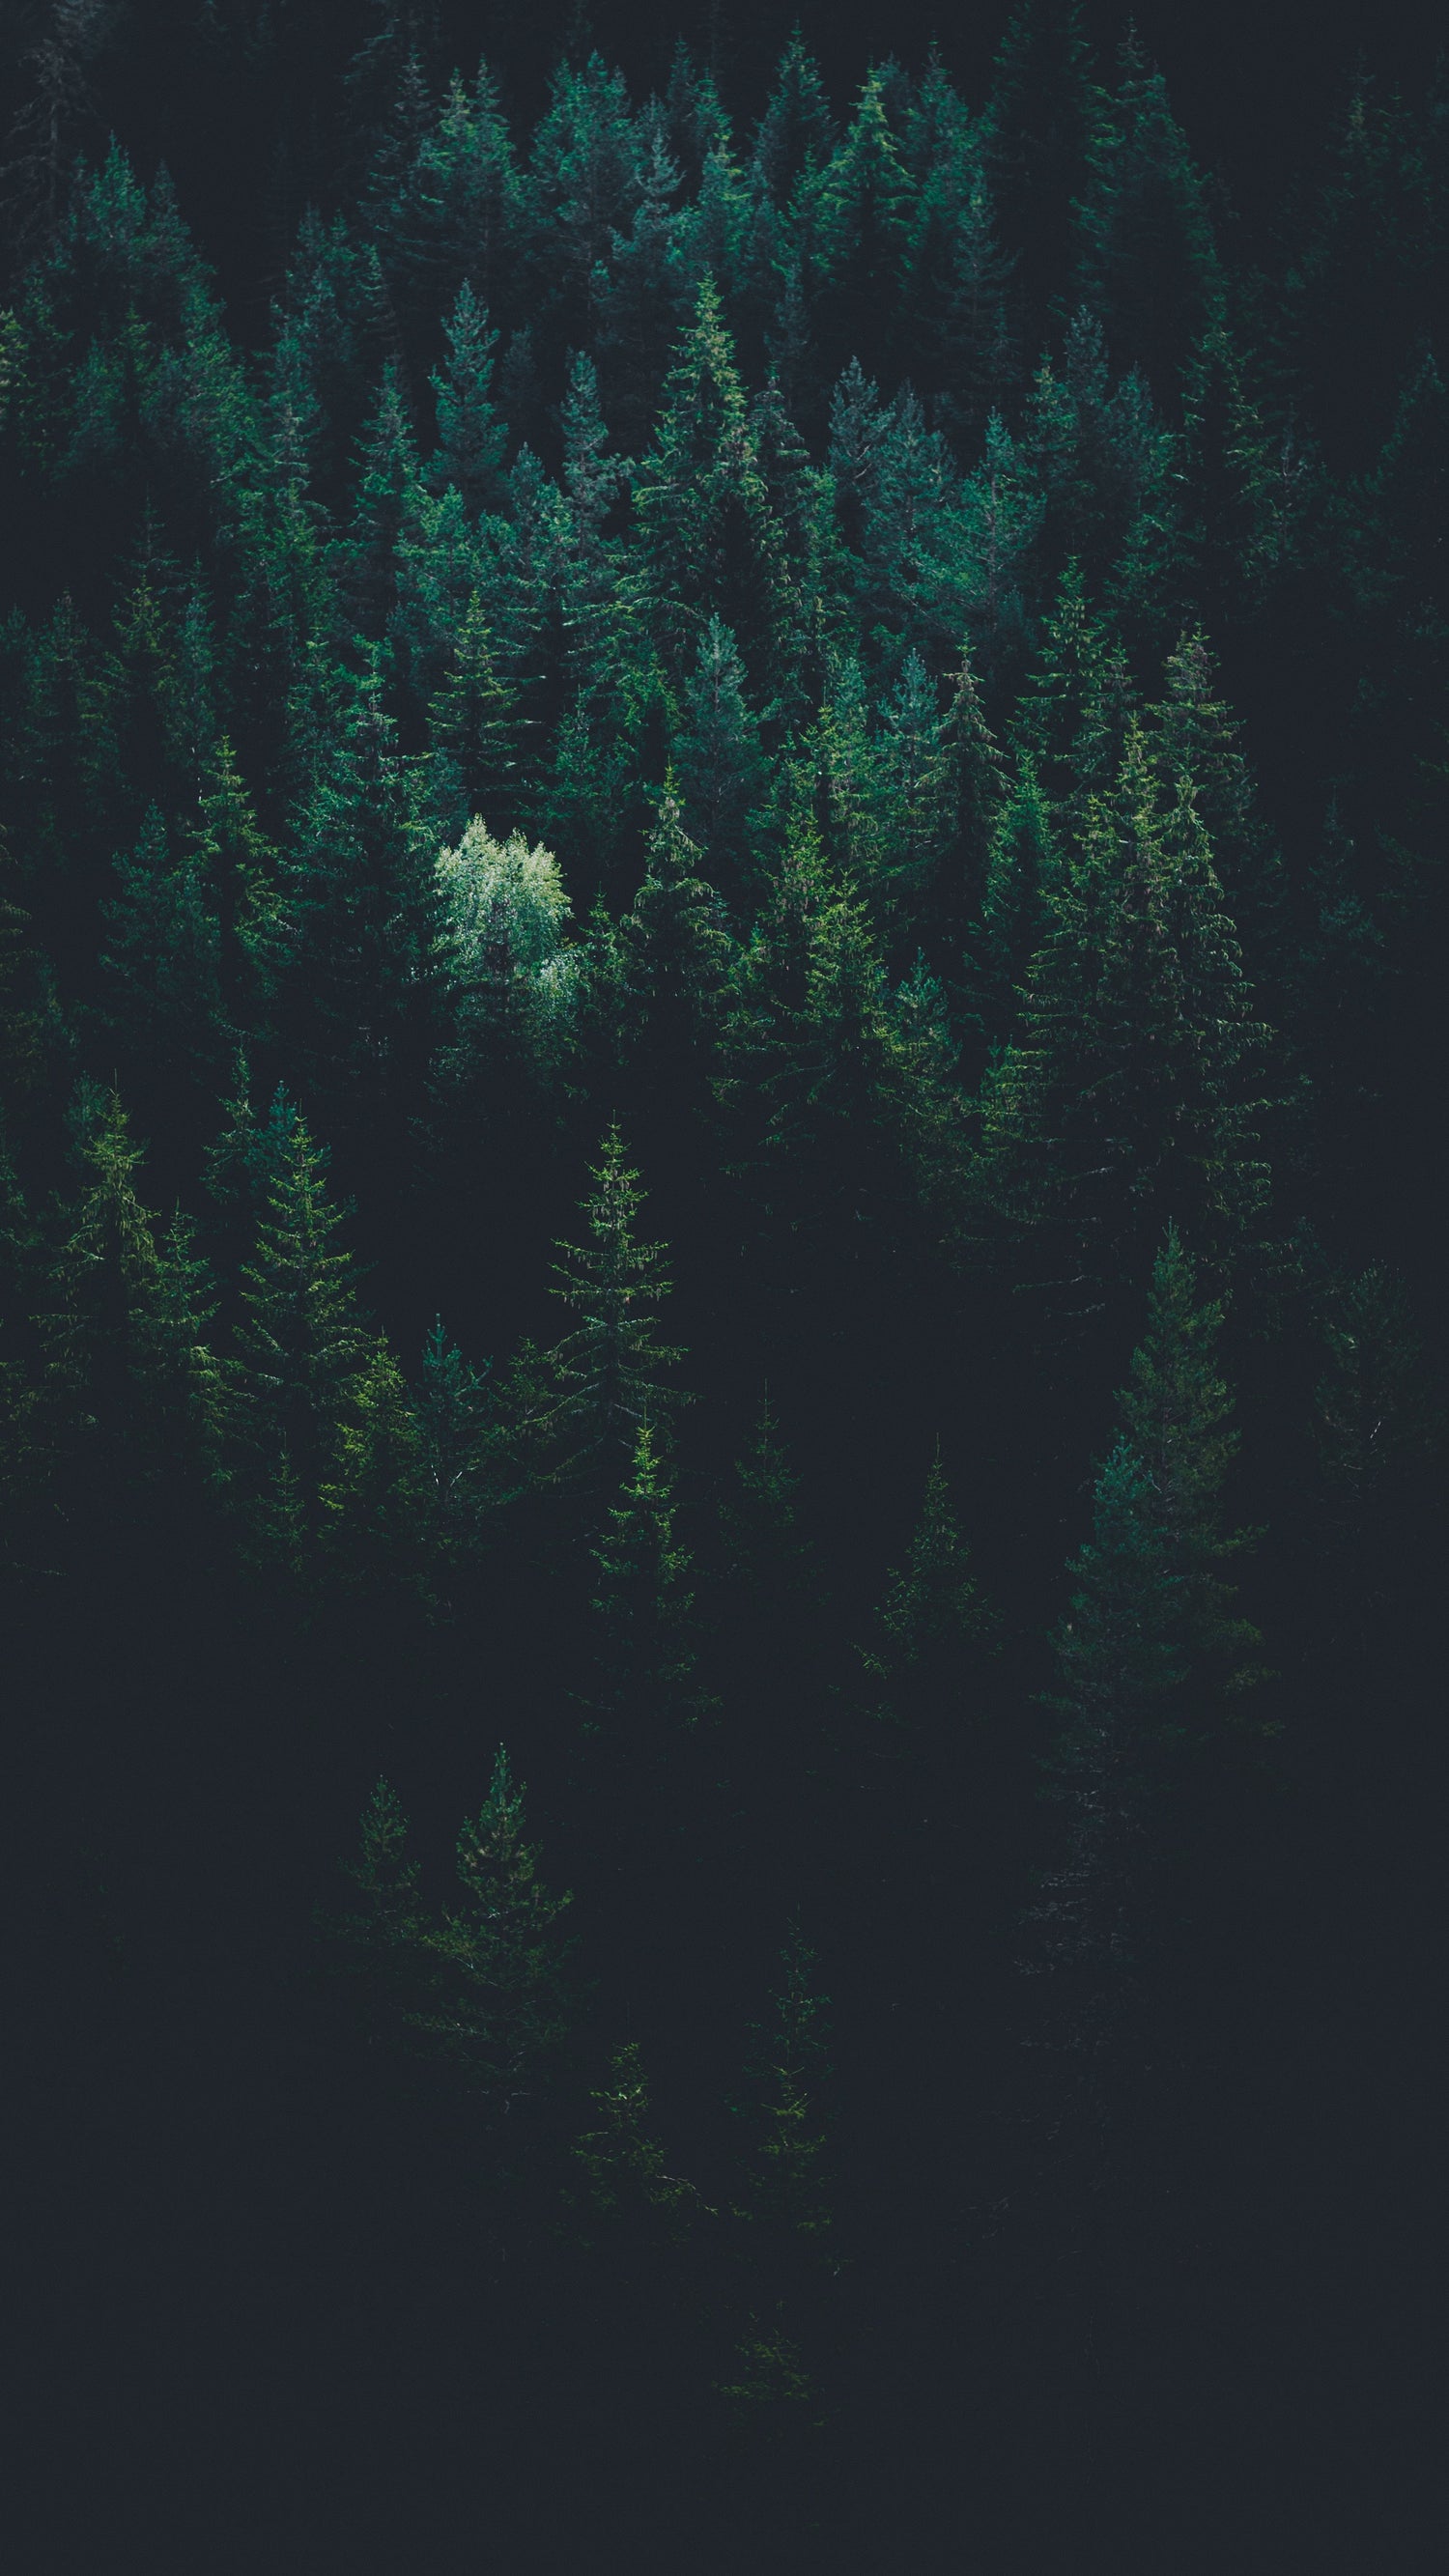 Evergreen Forest (Photo by Evgeni Evgeniev on Unsplash)